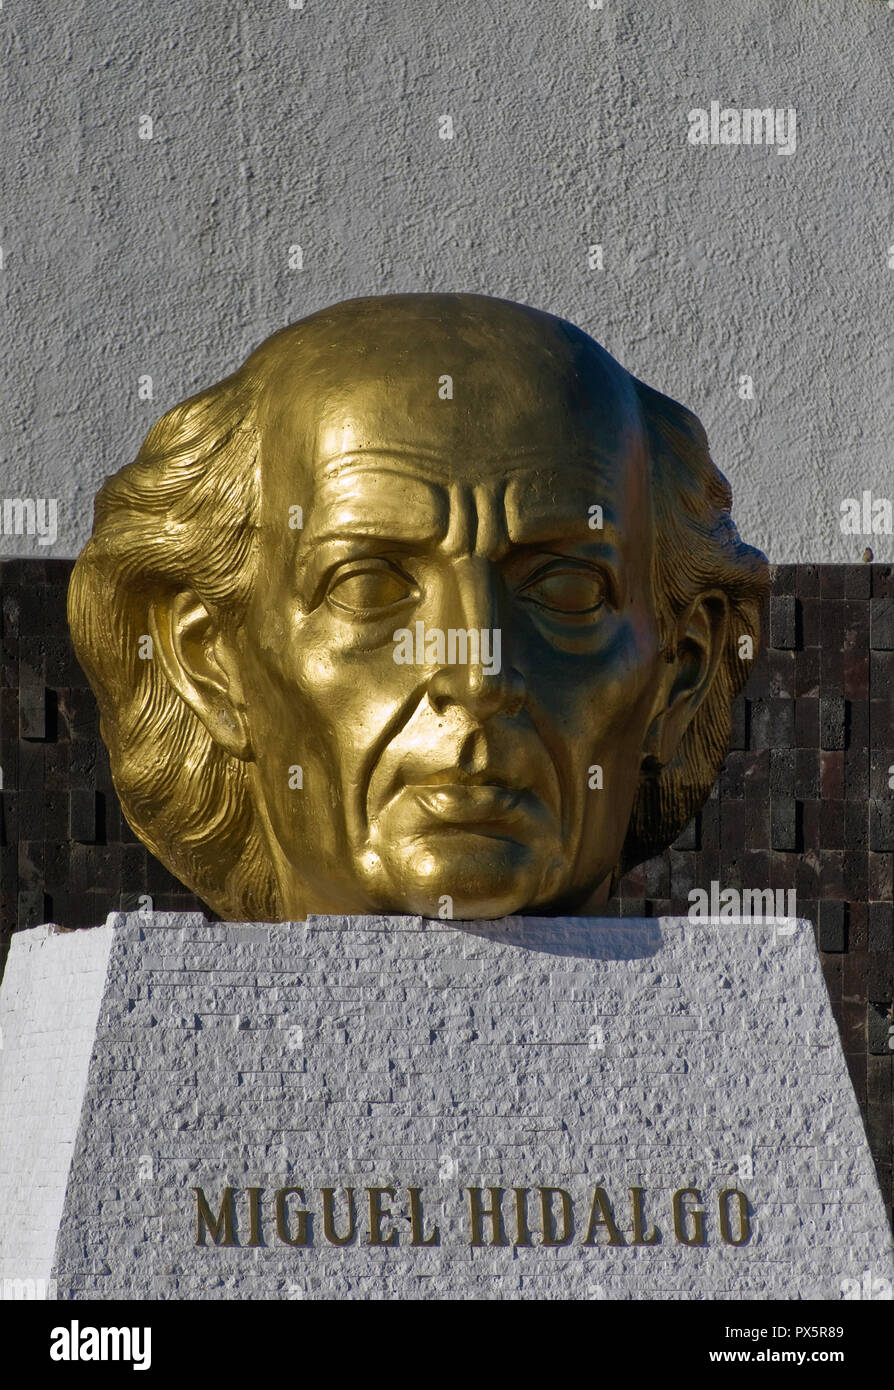 Migual Hidalgo bust at Civic Plaza, Ensenada, Baja California, Mexico Stock Photo